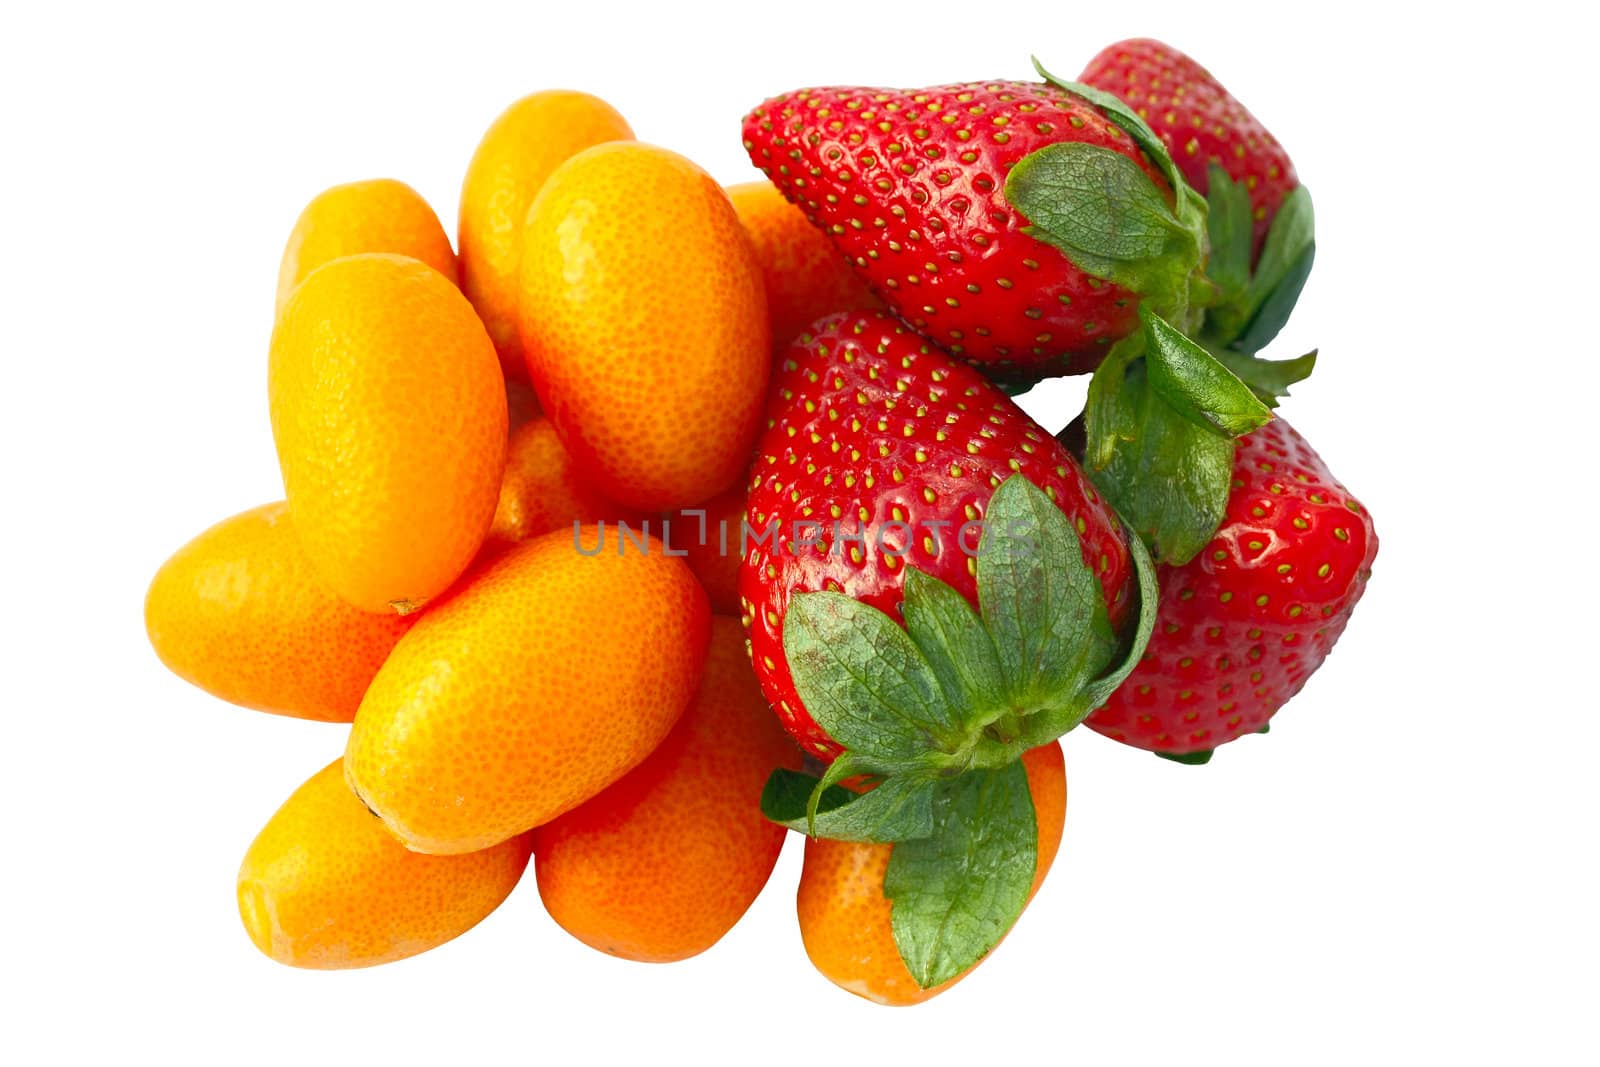 Fruit - strawberries and kumquat, isolated on a white background.